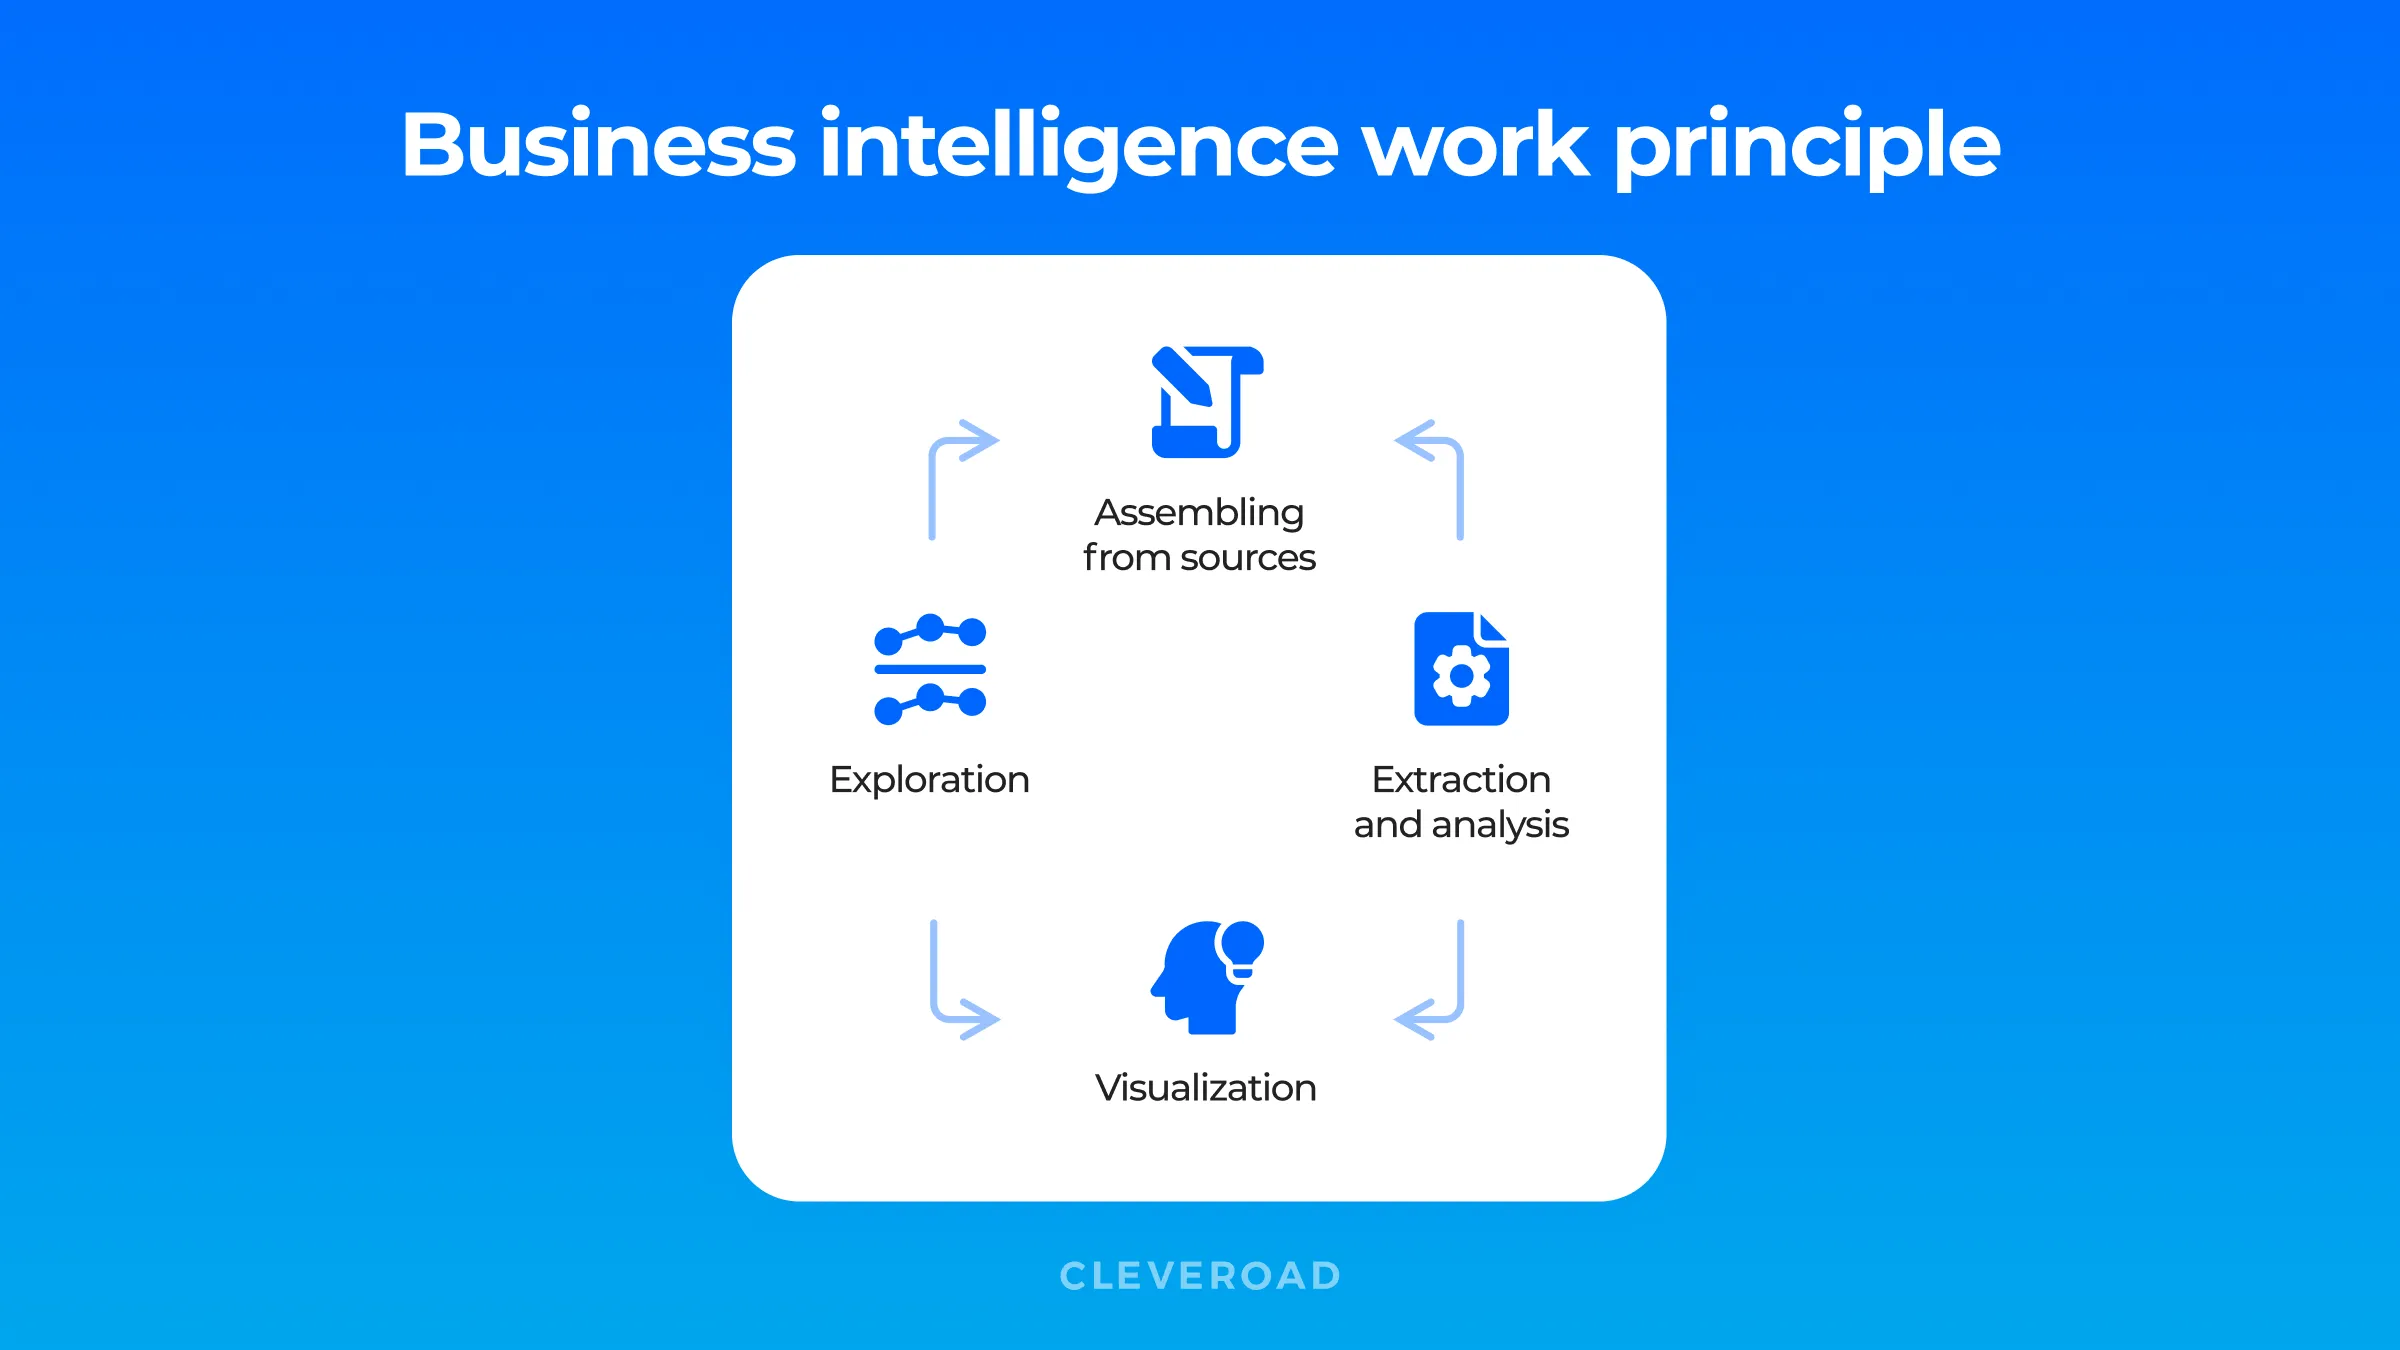 Business intelligence work principle